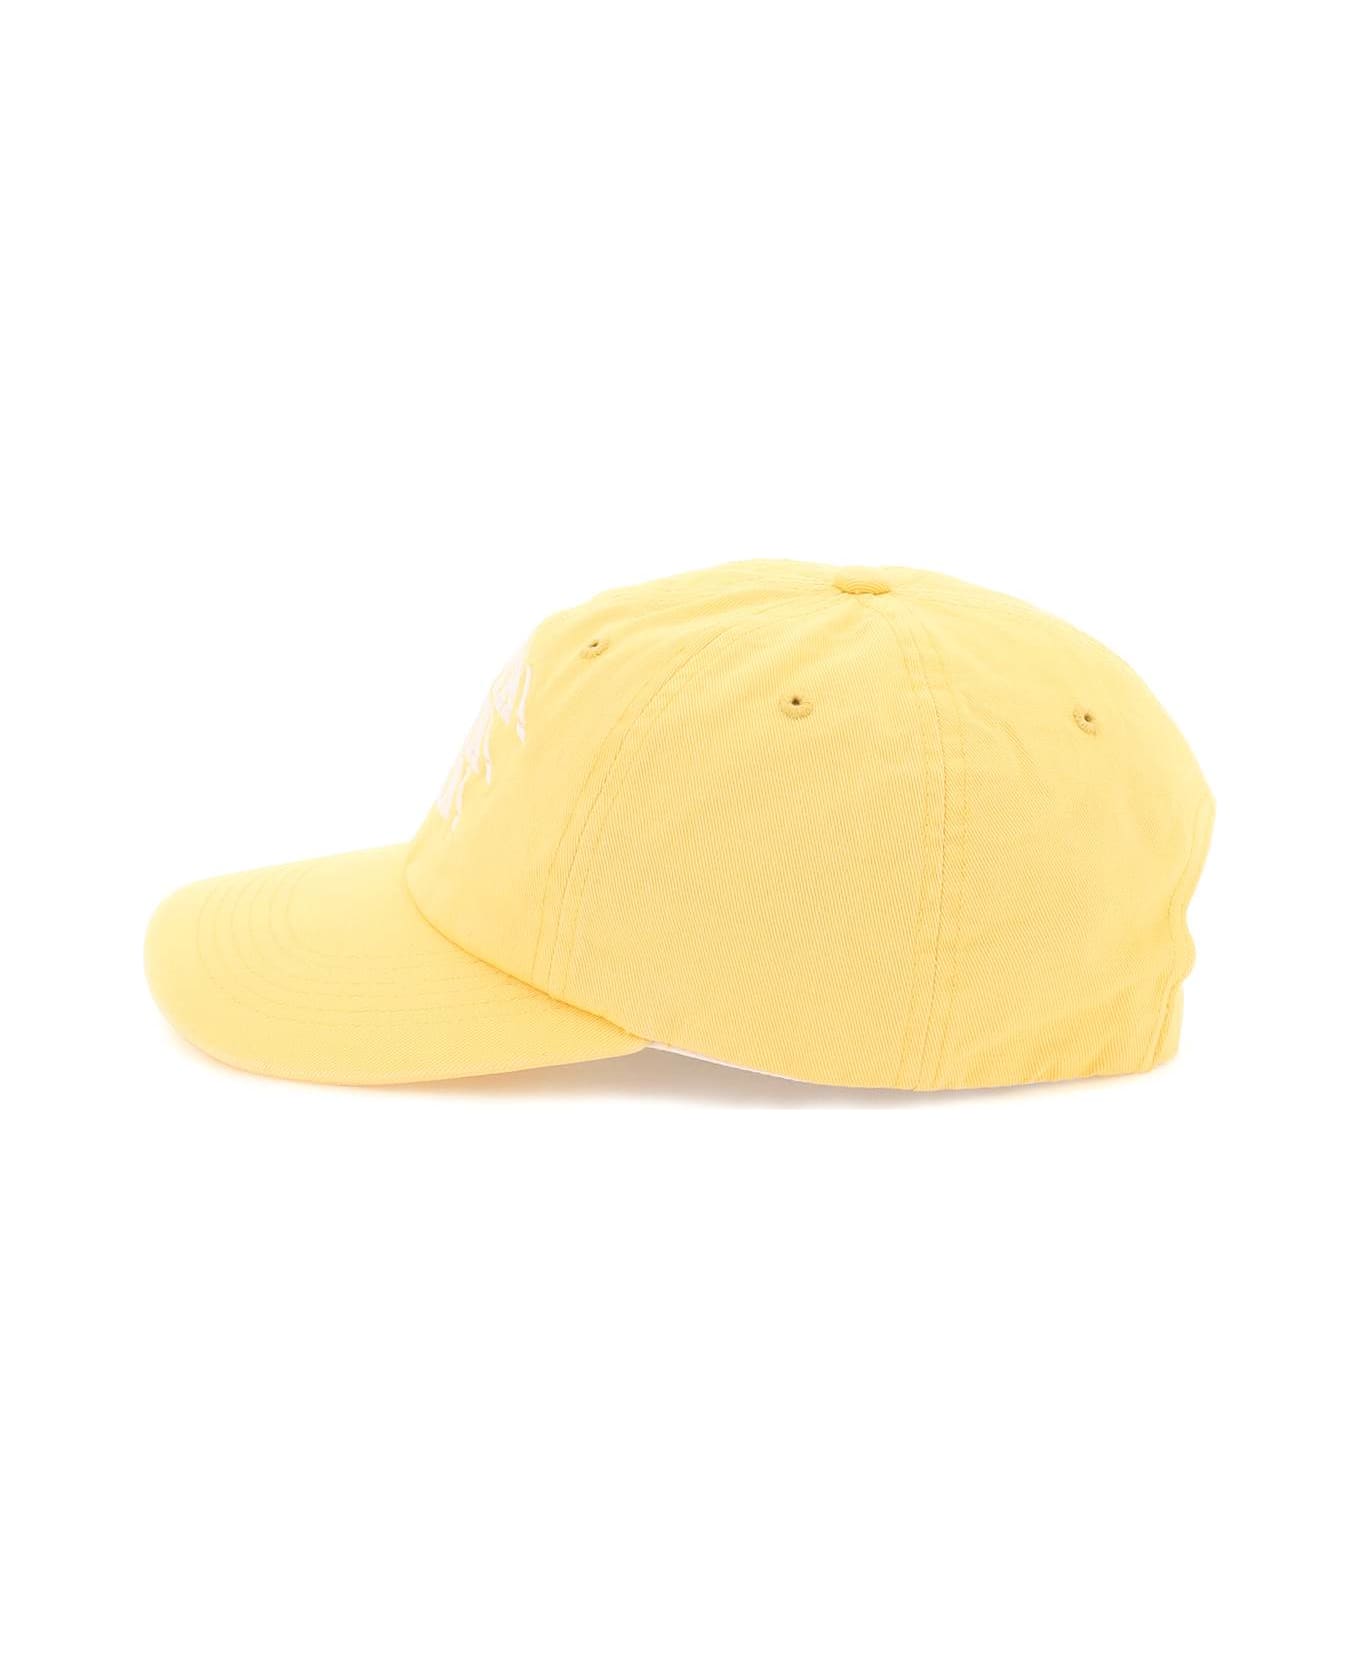 Liberal Youth Ministry Cotton Baseball Cap - LIGHT YELLOW (Yellow)